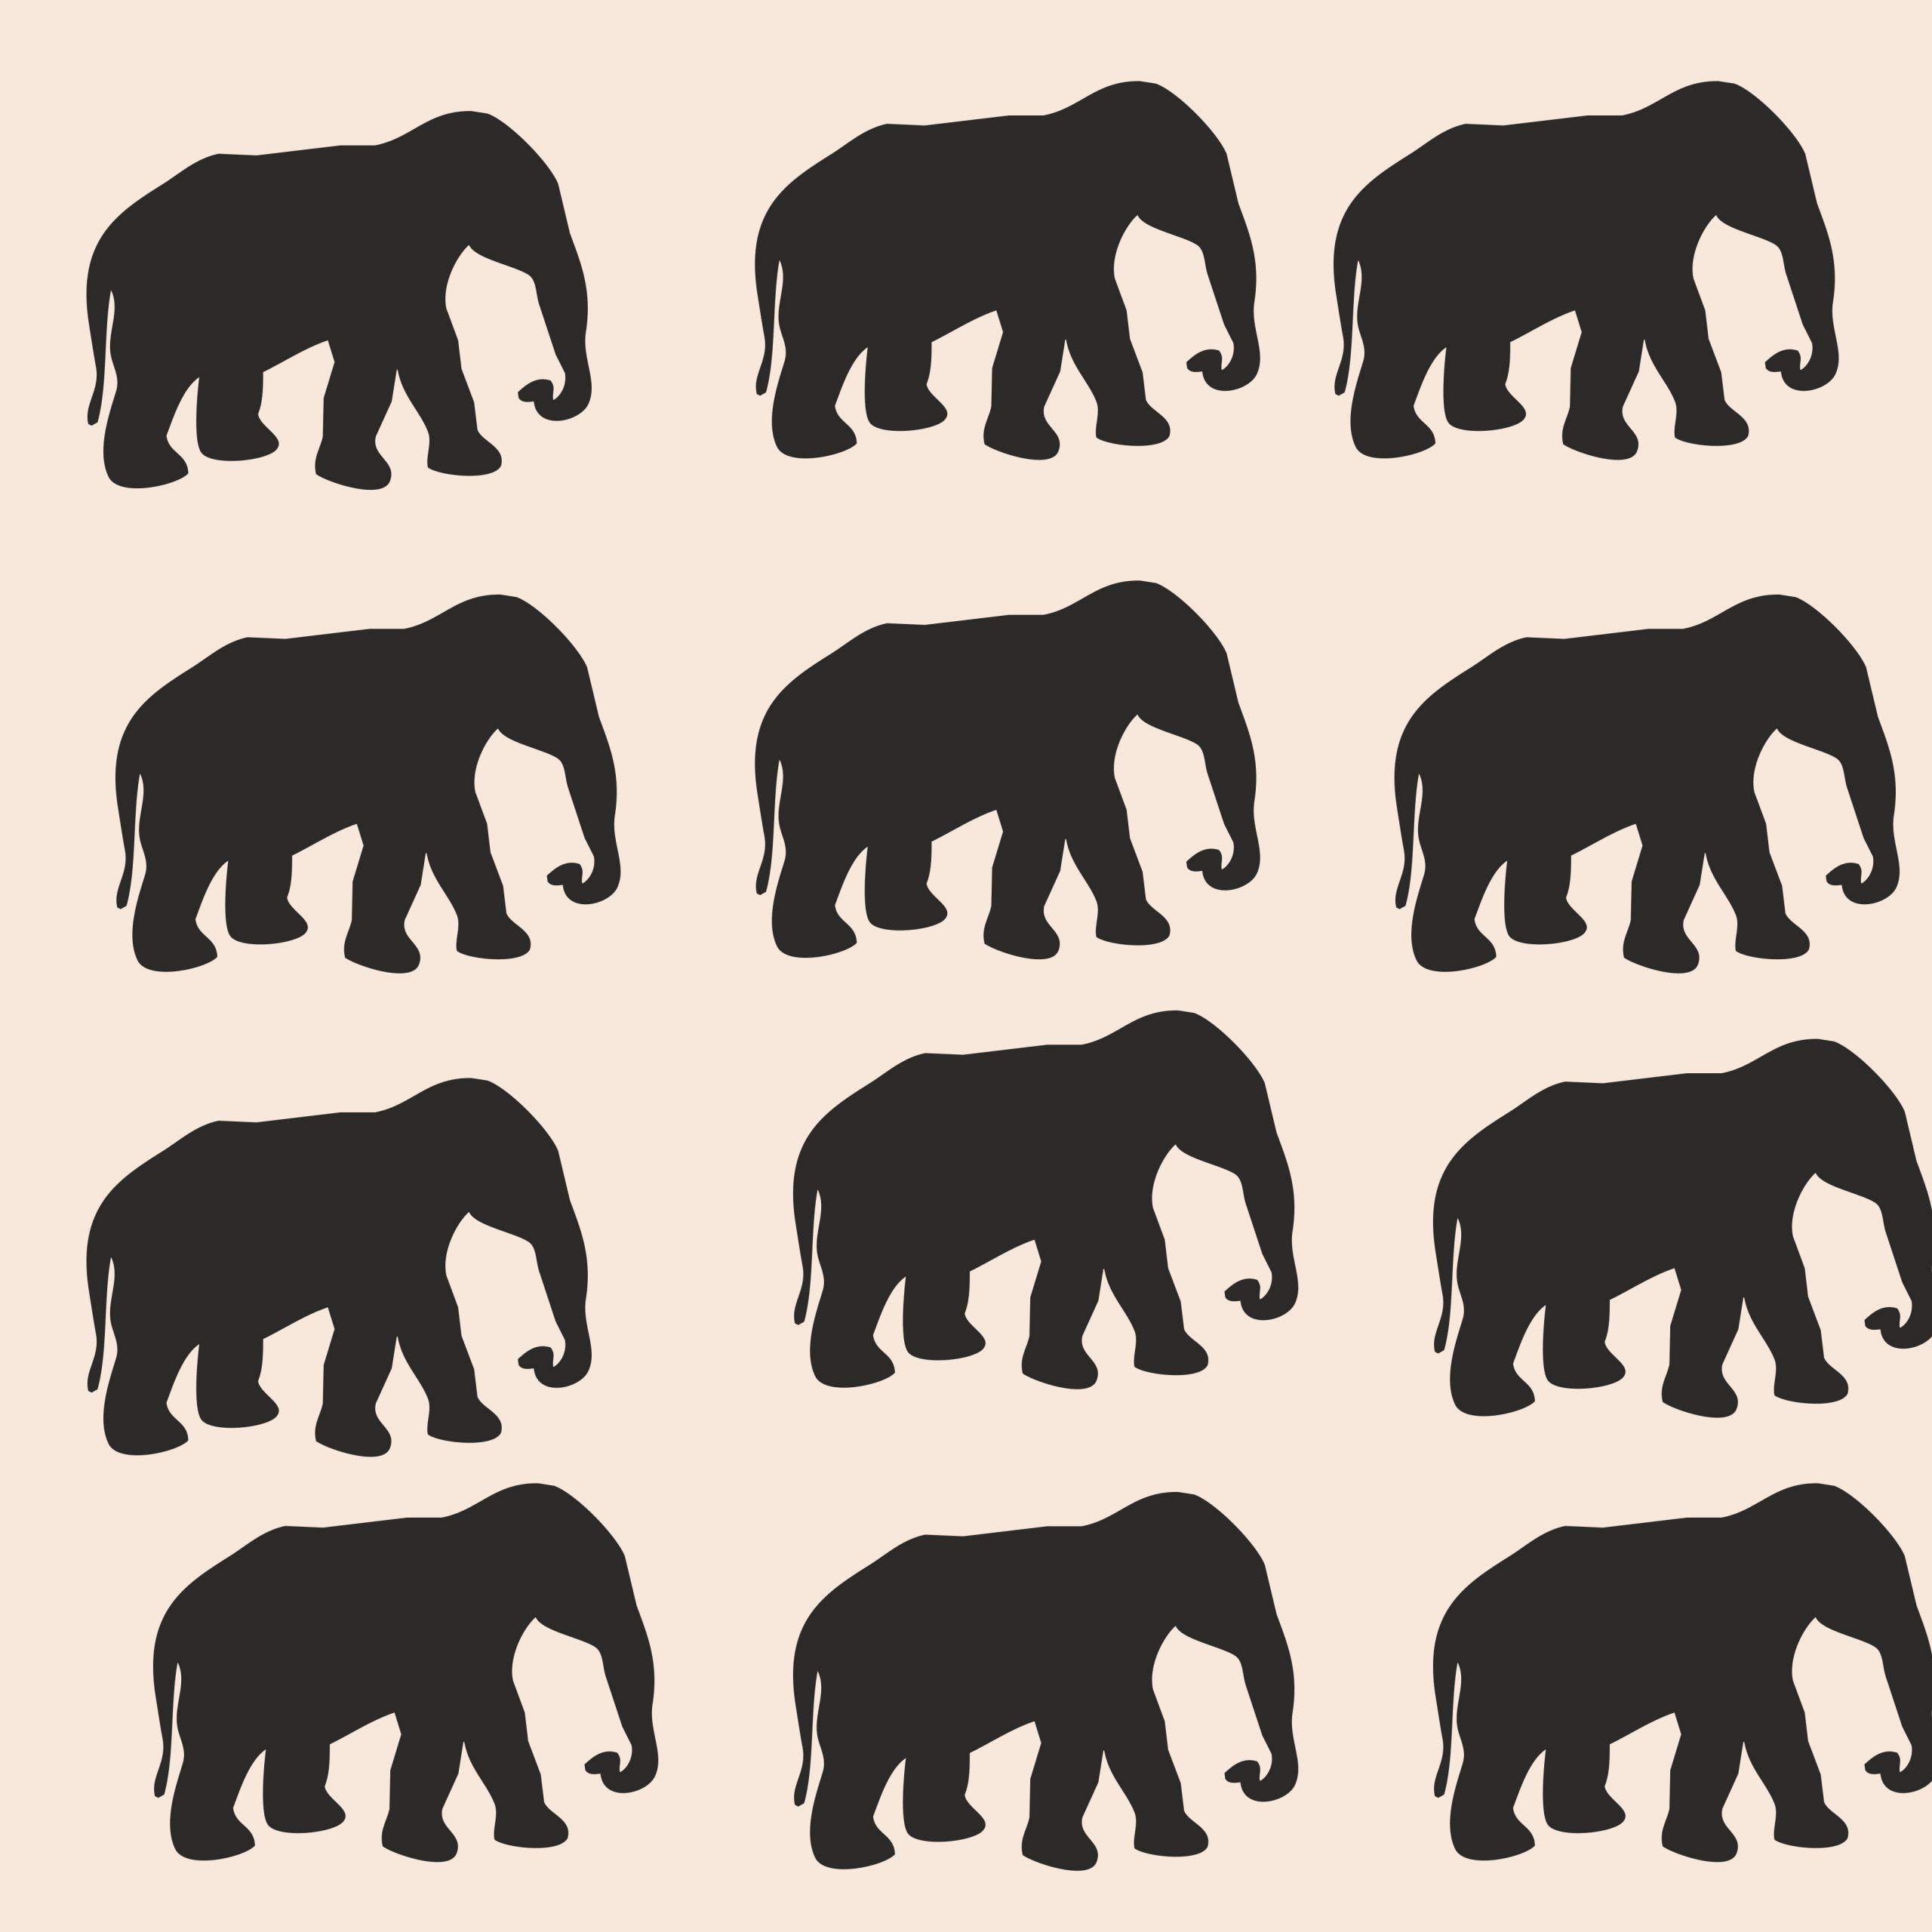 Elephants illustration